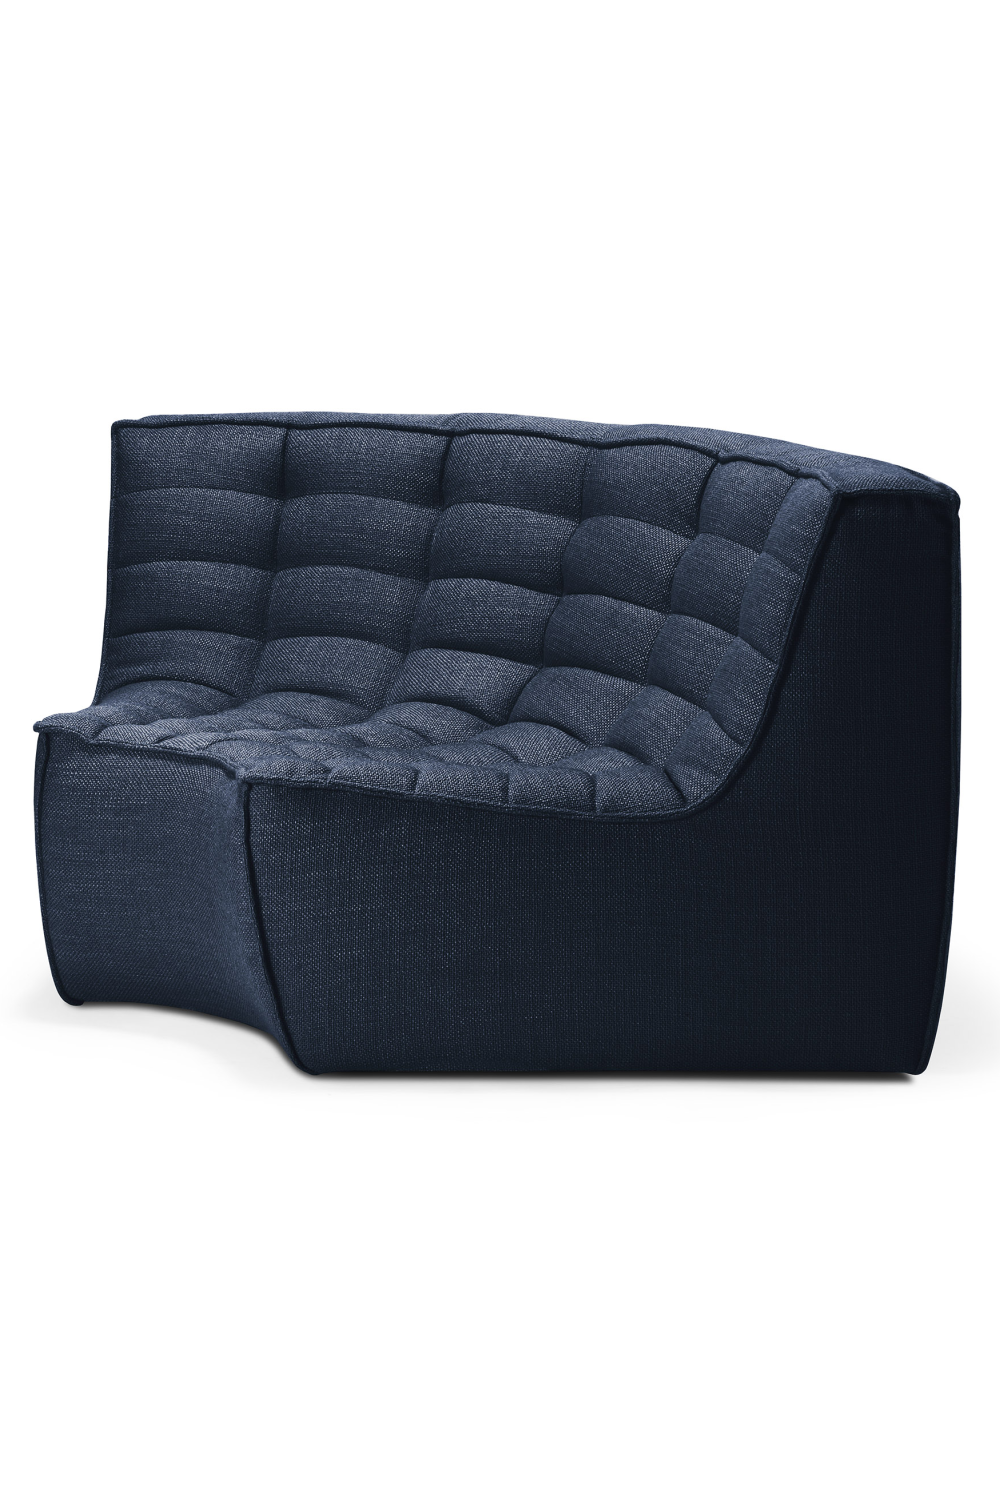 Graphite Fabric Upholstered Sofa | Ethnicraft N701 | Oroa.com